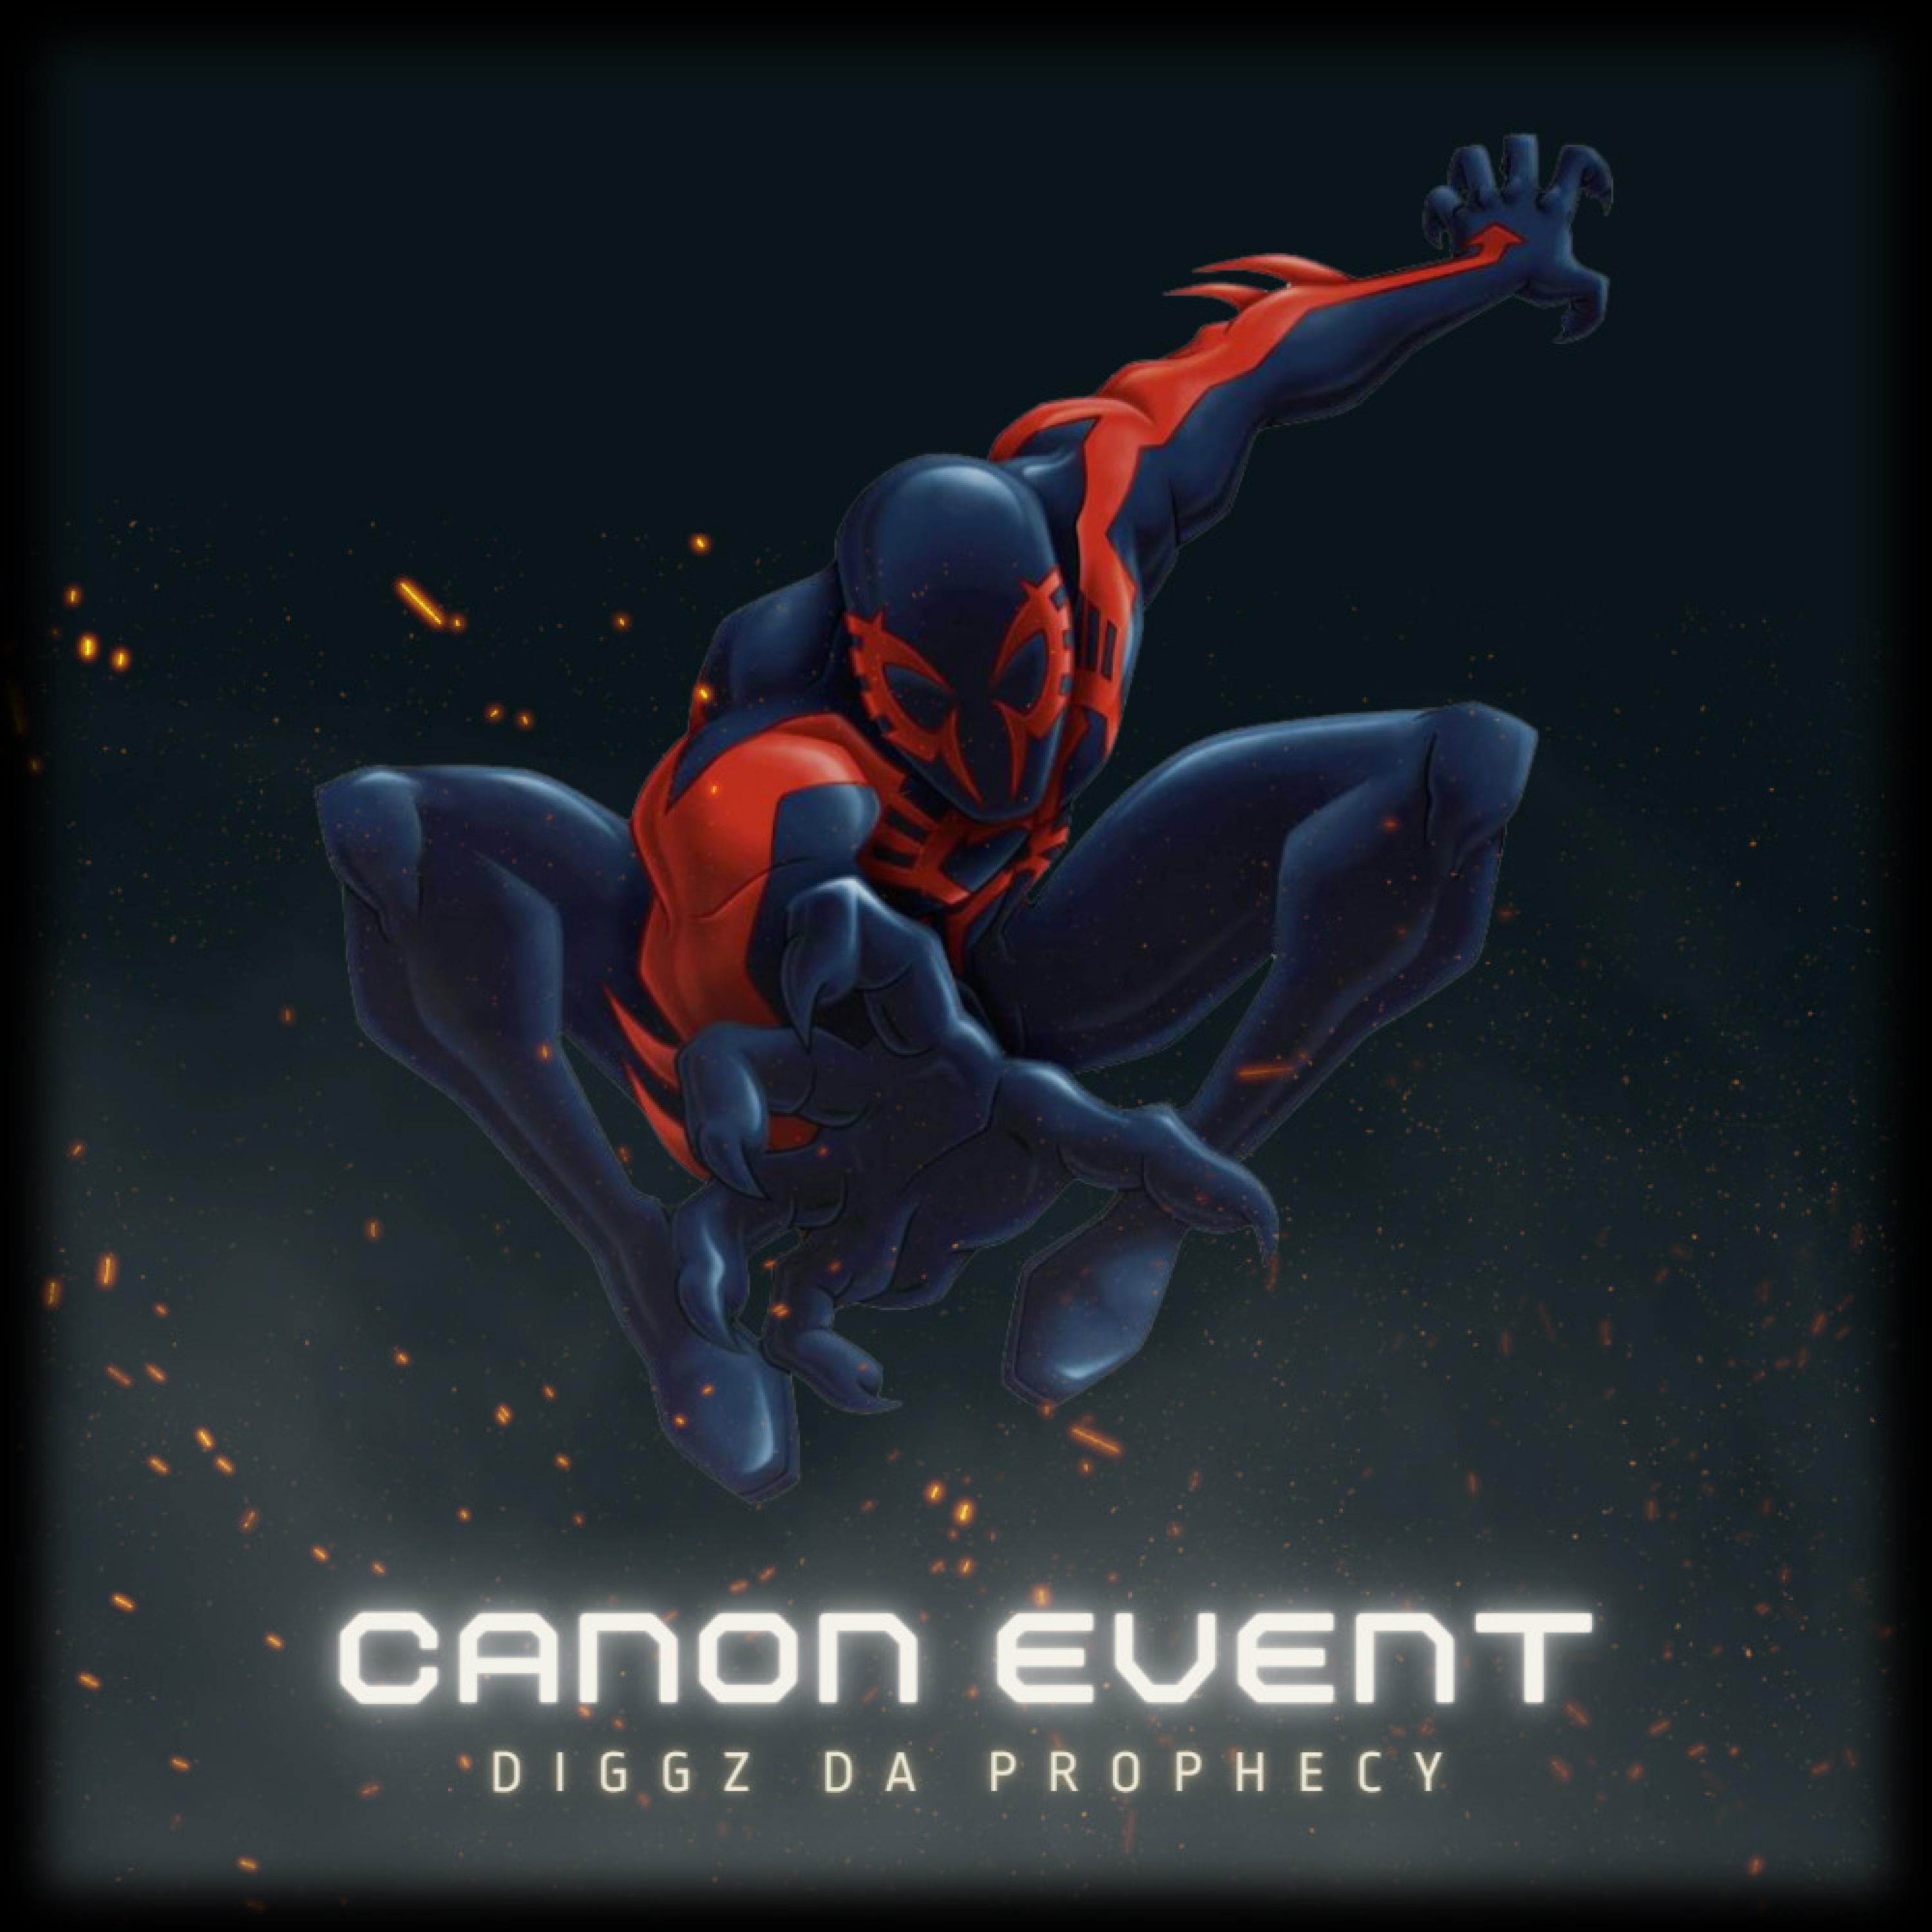 Diggz Da Prophecy - Canon Event (Miguel O'Hara Rap)